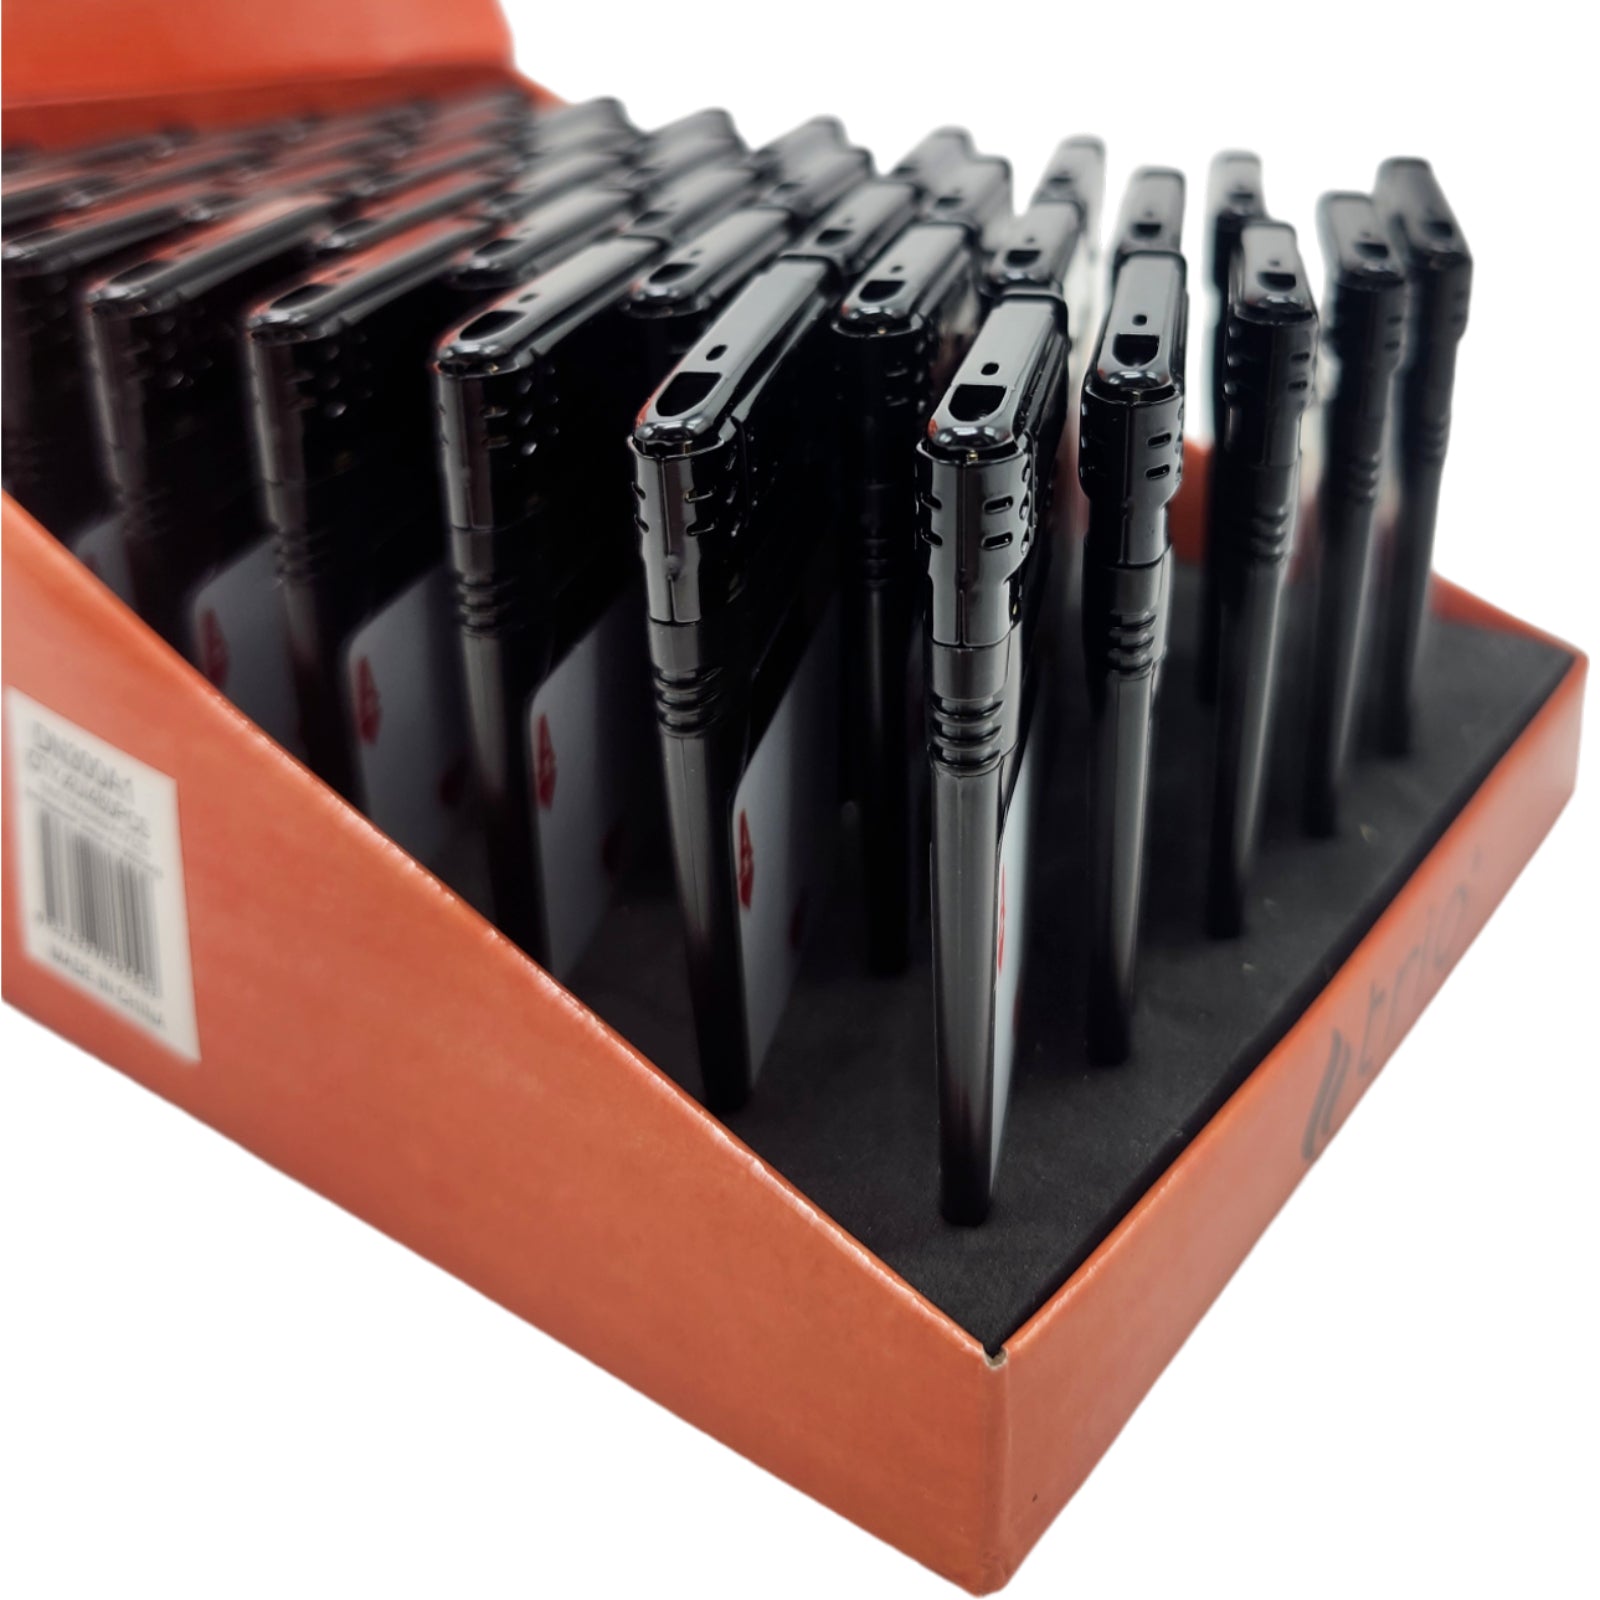 Slimline Disposable Lighters Royal Flush Card Trio Lighters - Homeware Discounts